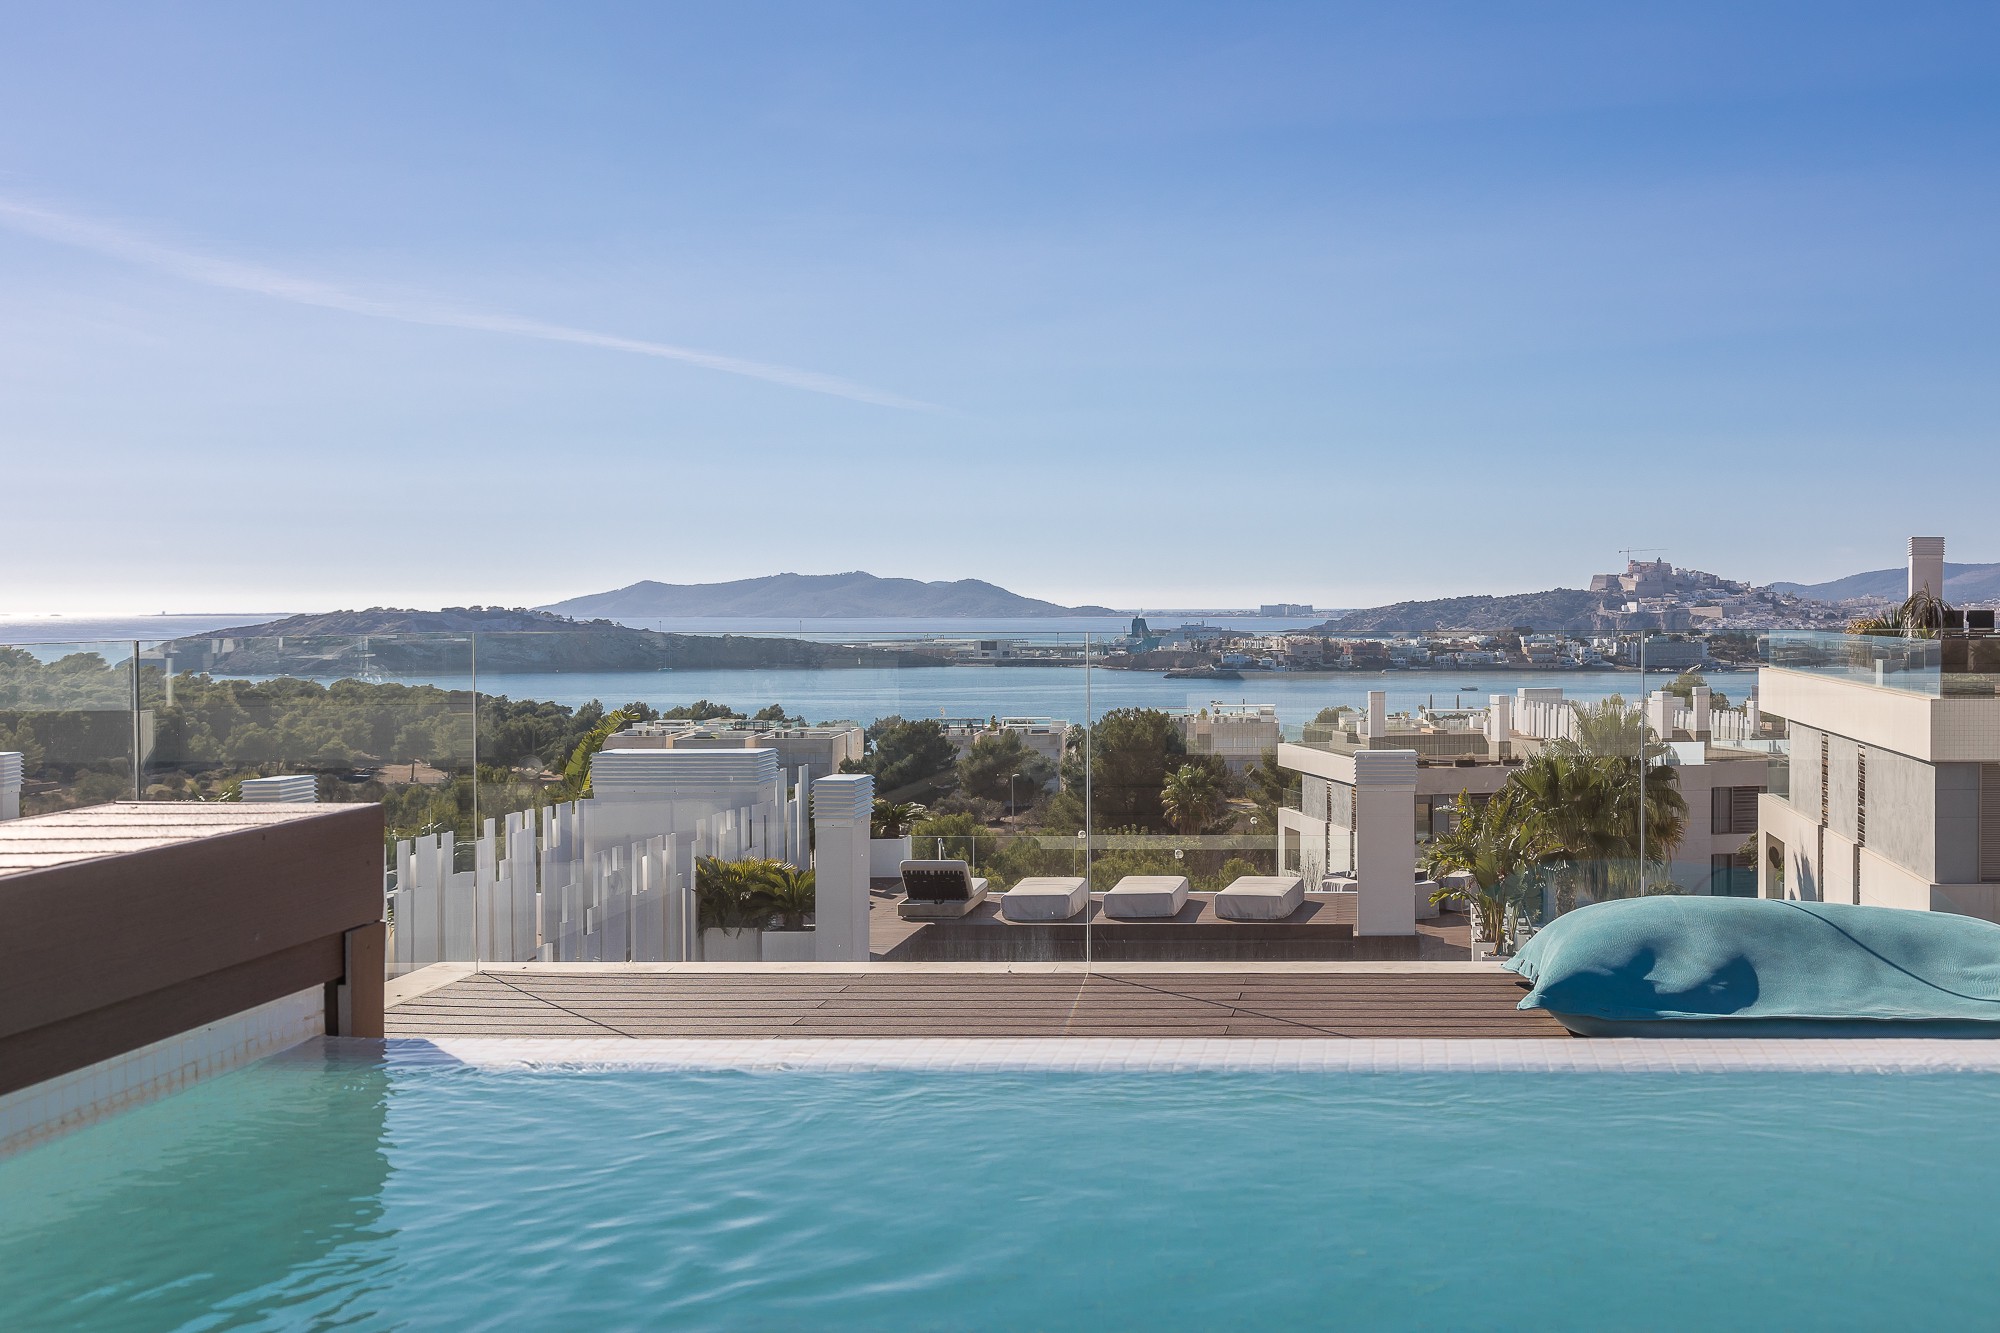 Lujoso ático con piscina privada en exclusiva residencia